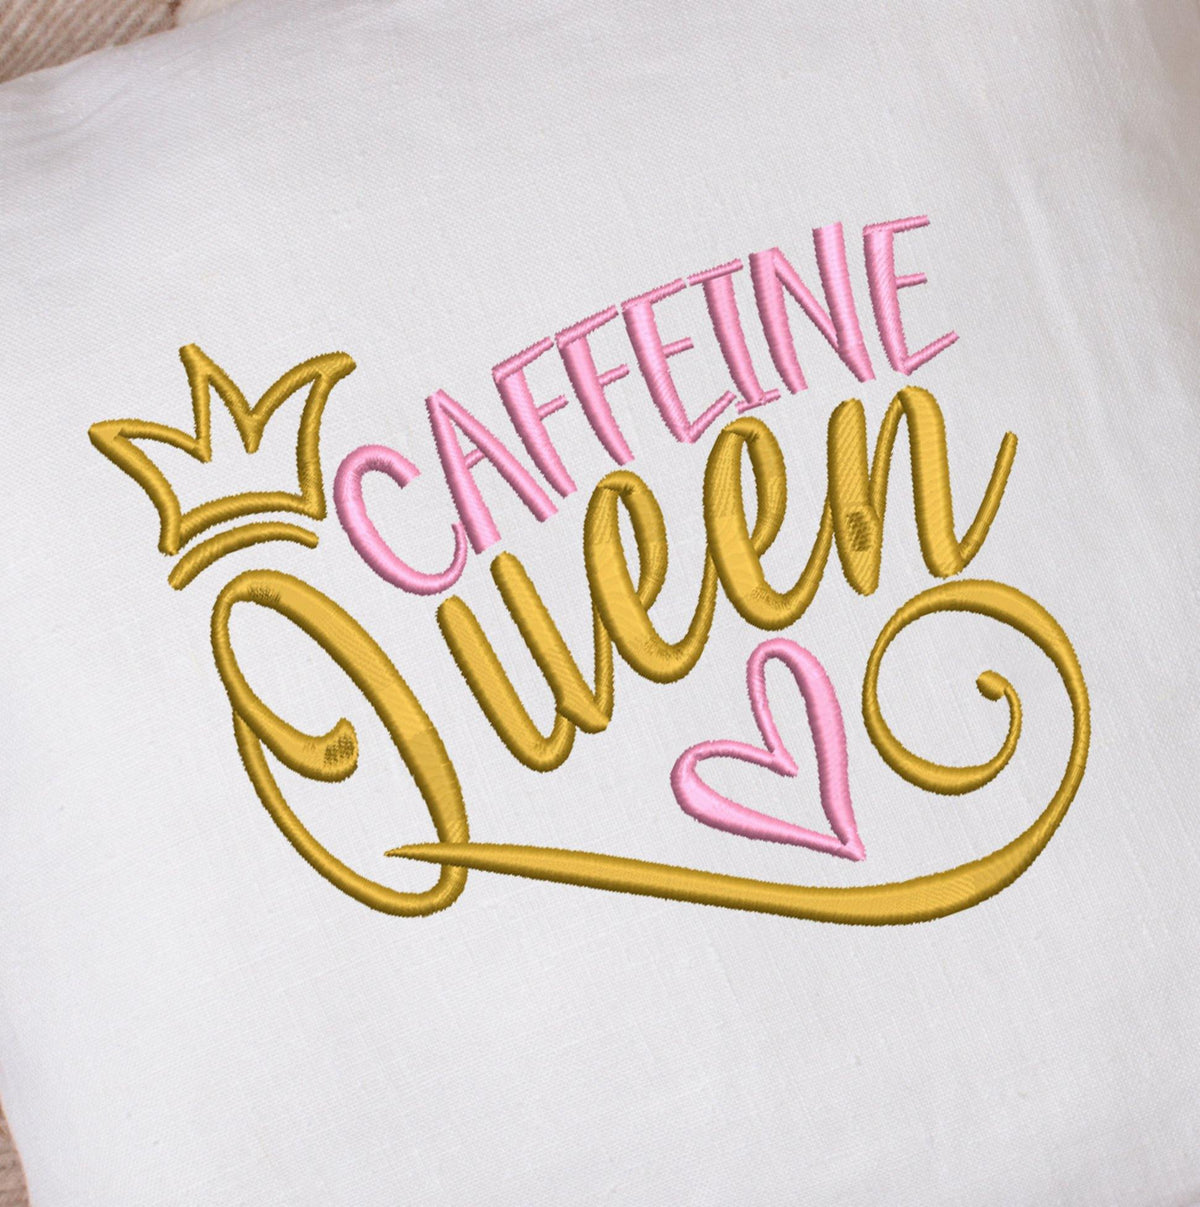 Caffeine Queen 2021 Embroidery Design - Oh My Crafty Supplies Inc.